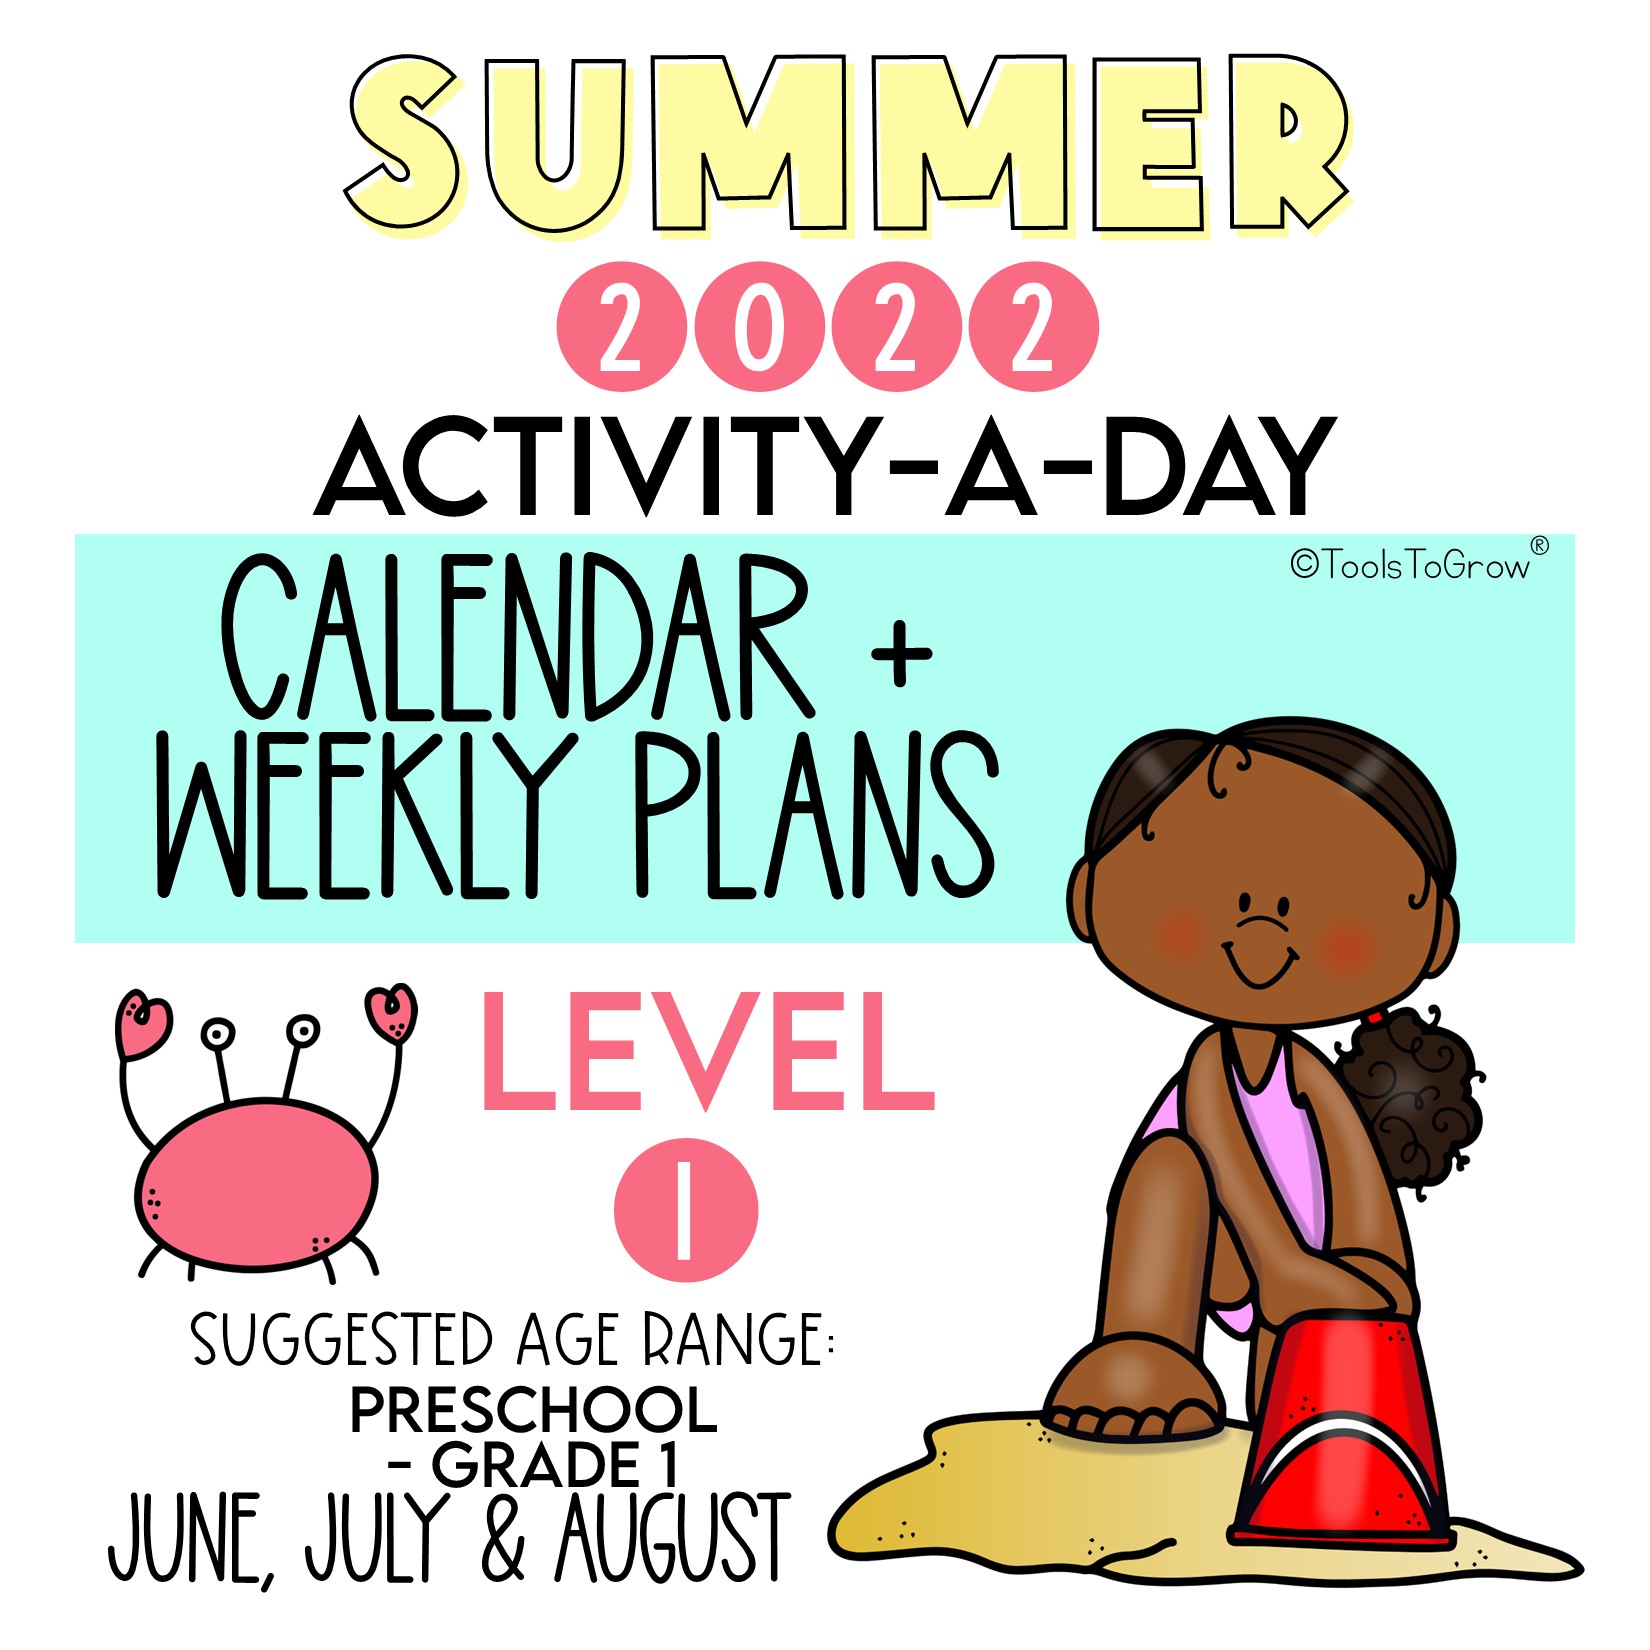 Summer ActivityaDay Calendar + Weekly Plans + Resources Level 1